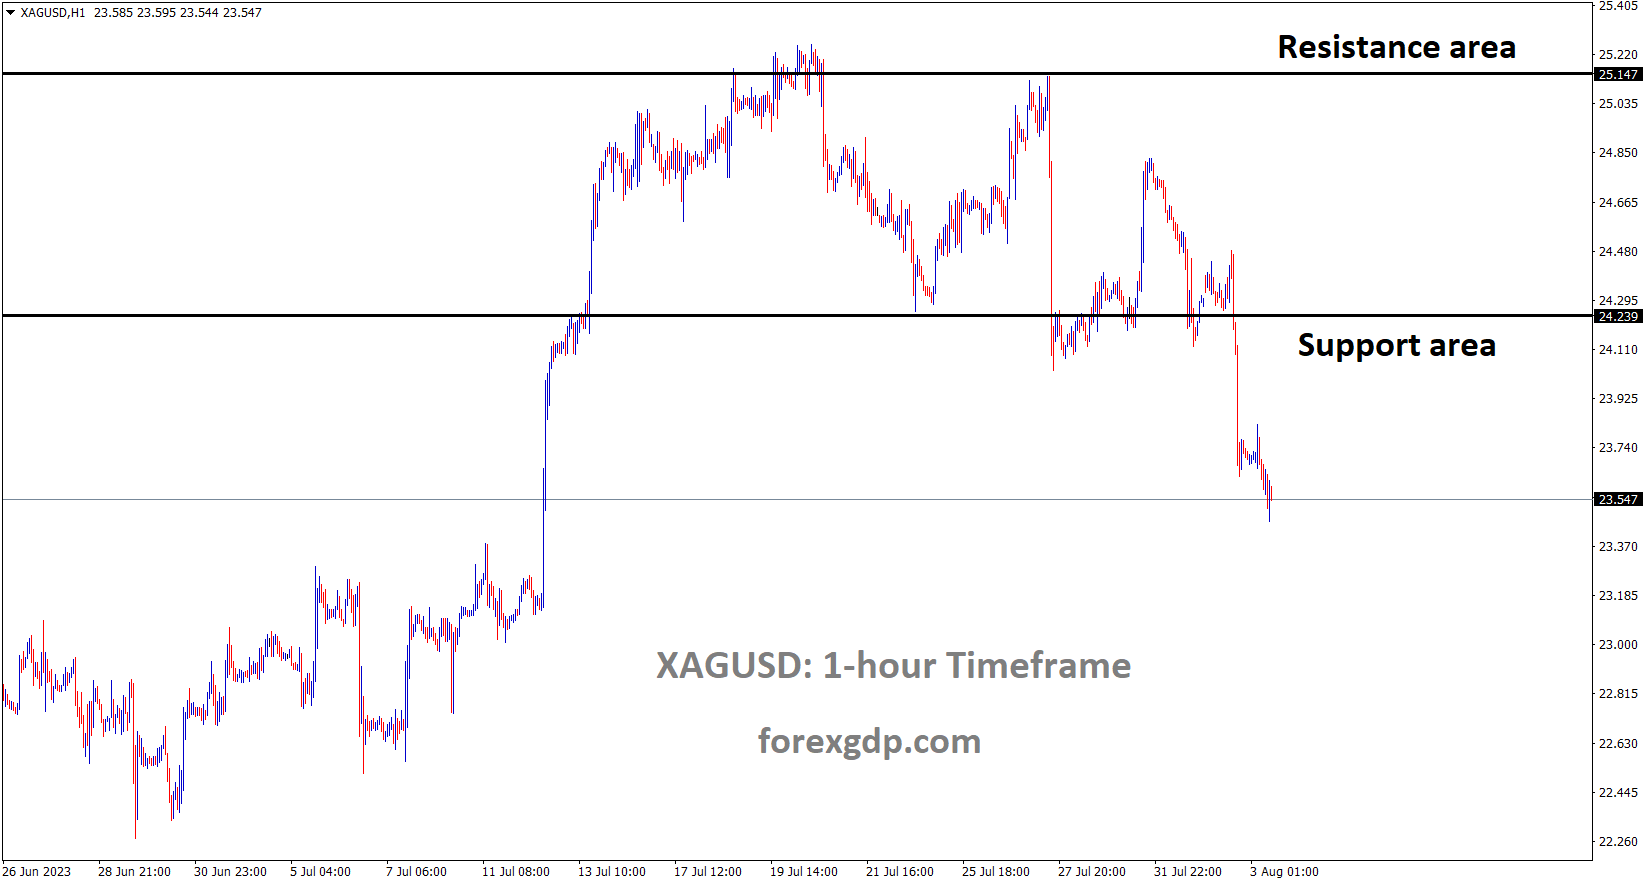 XAGUSD Silver price has broken the Box pattern in downside